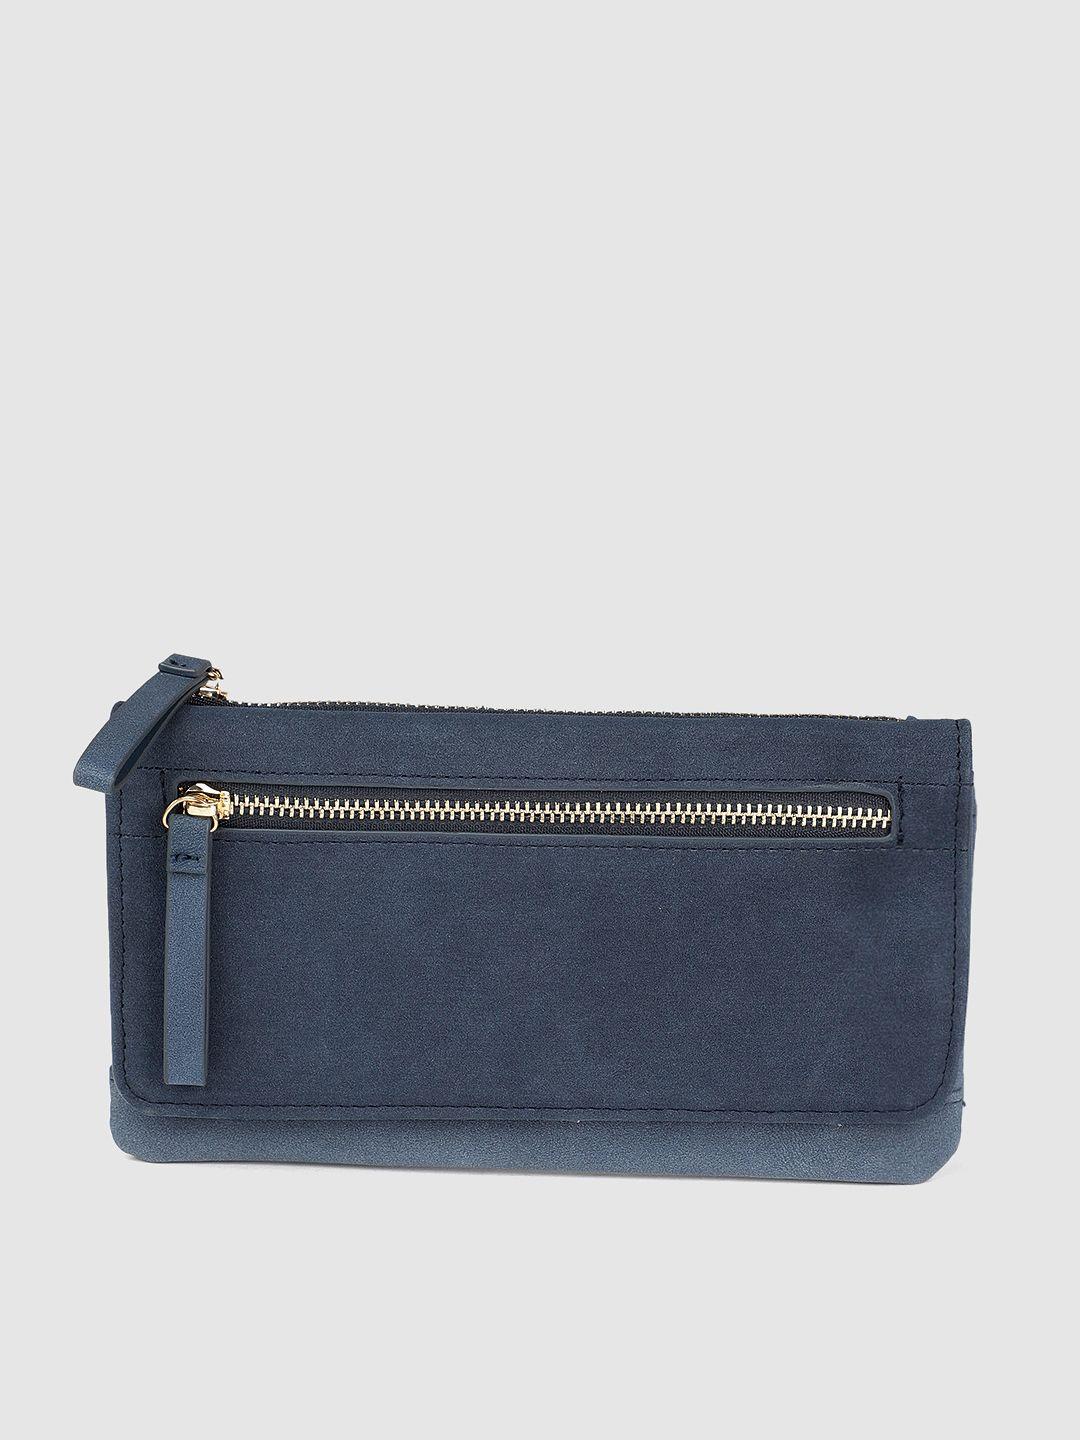 accessorize women navy blue solid two fold wallet